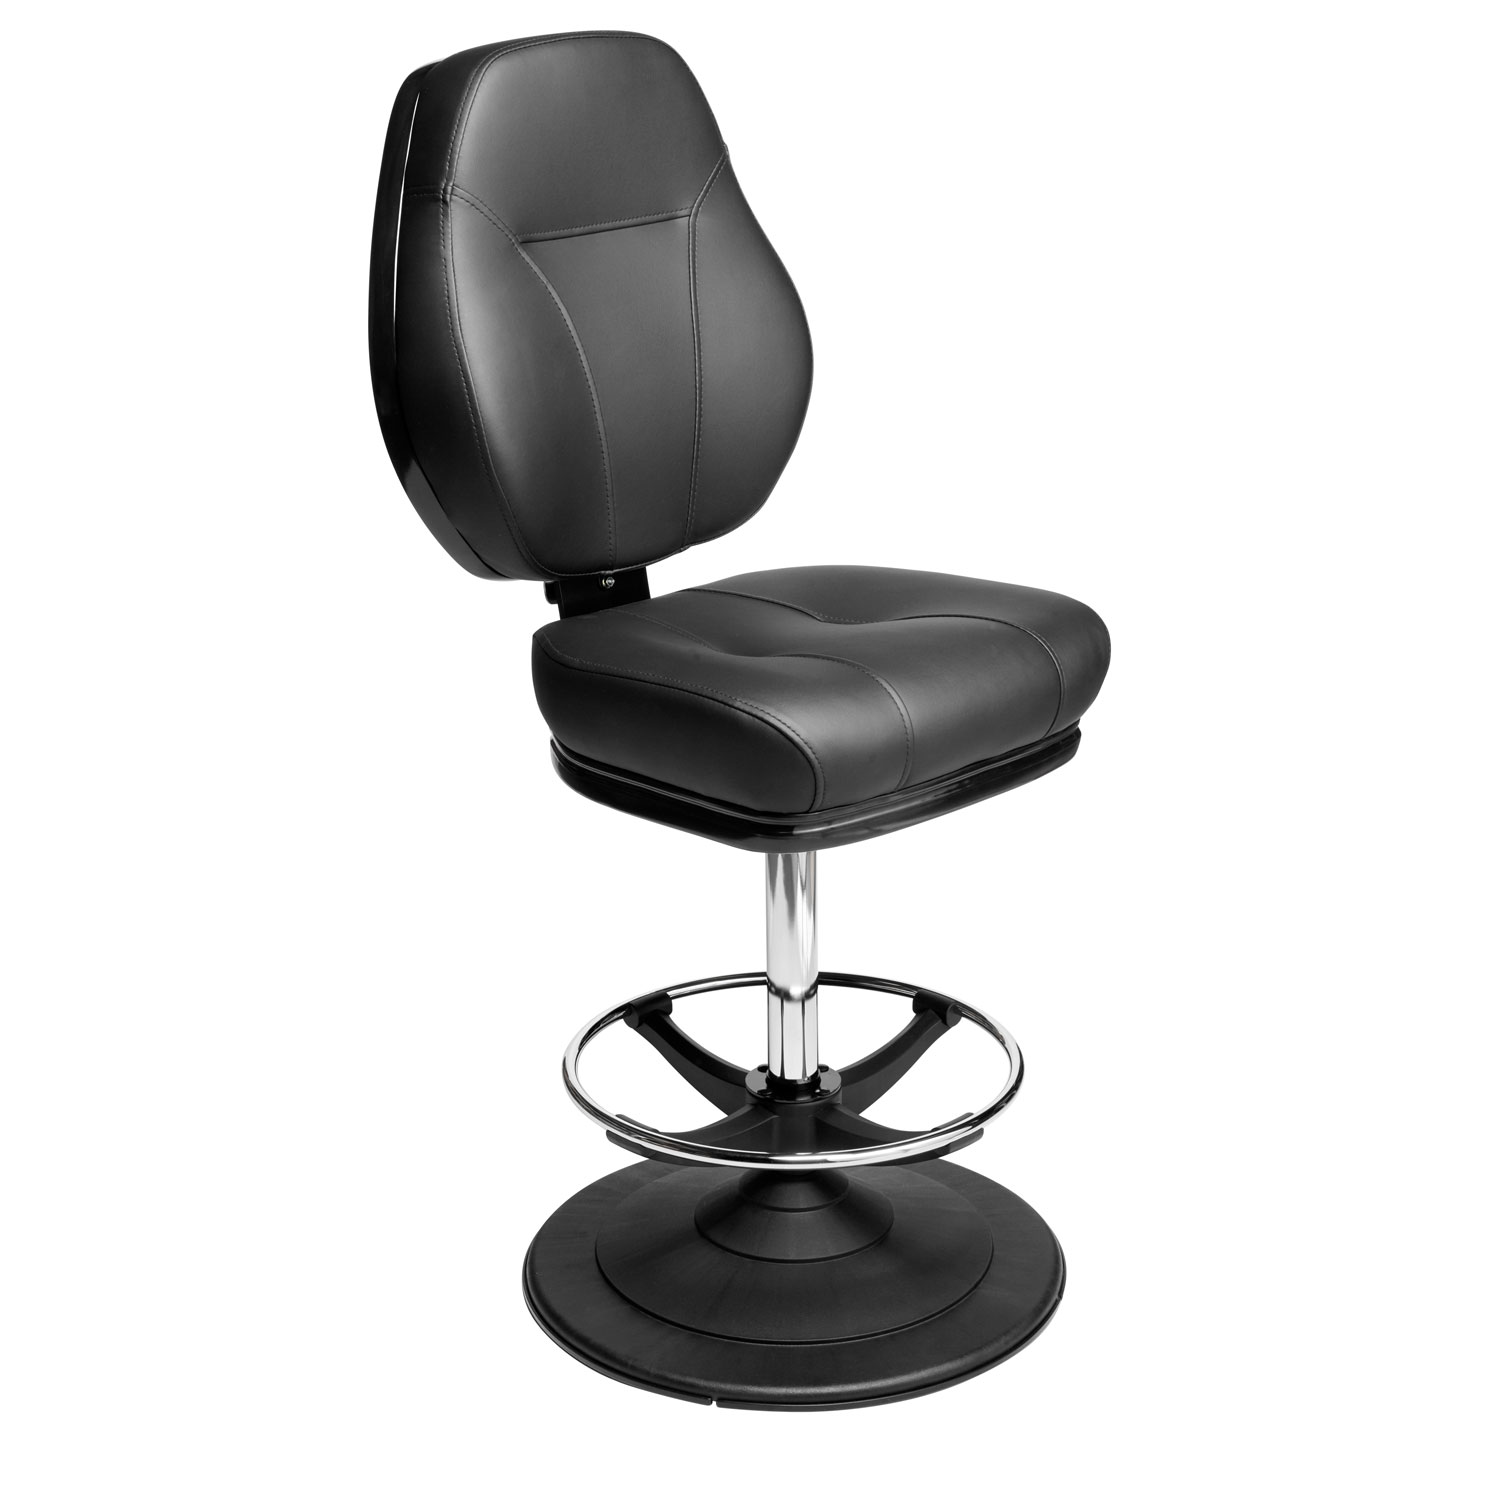 Gemini casino chair and gaming stool